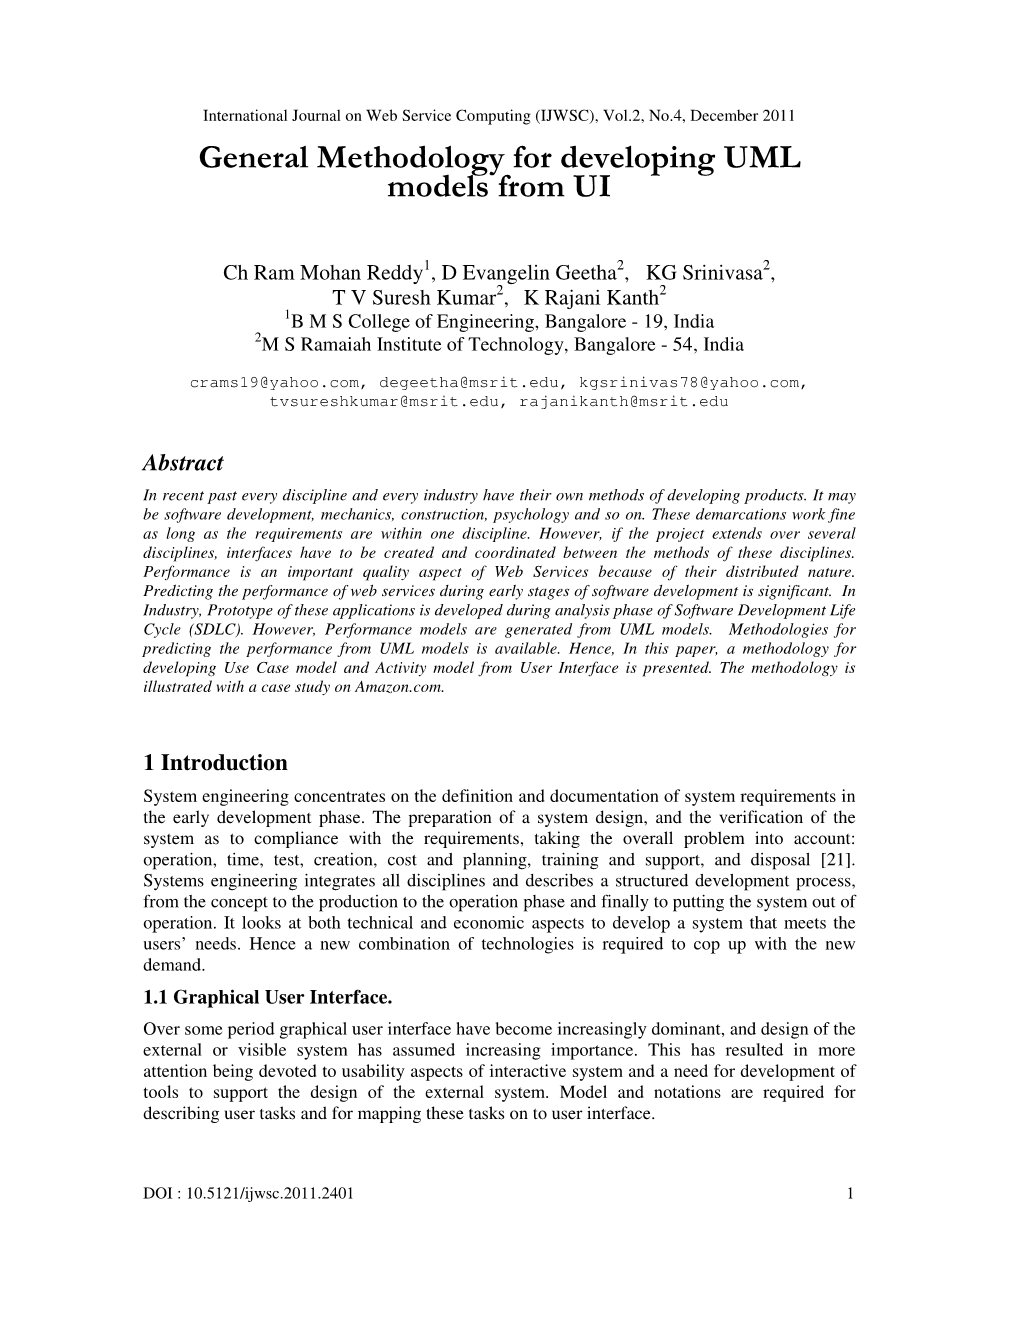 General Methodology for Developing UML Models from UI